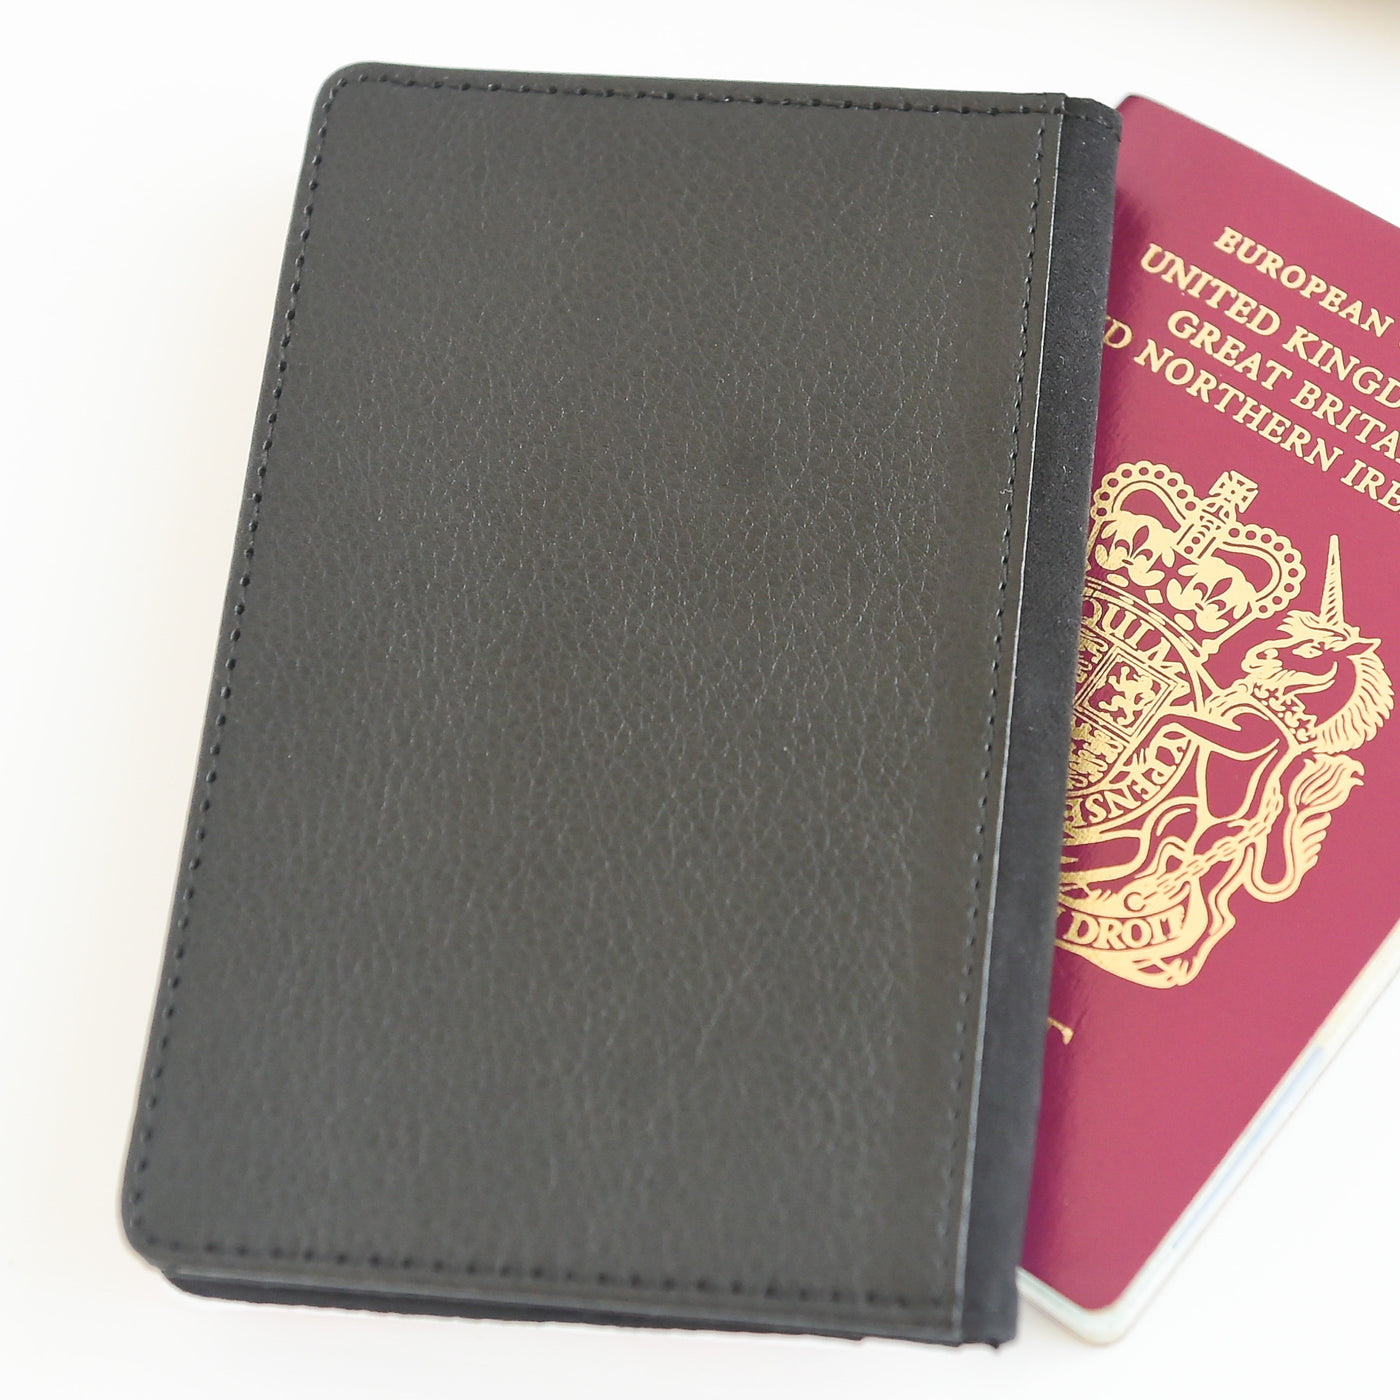 Kids Personalised Passport | Foxy